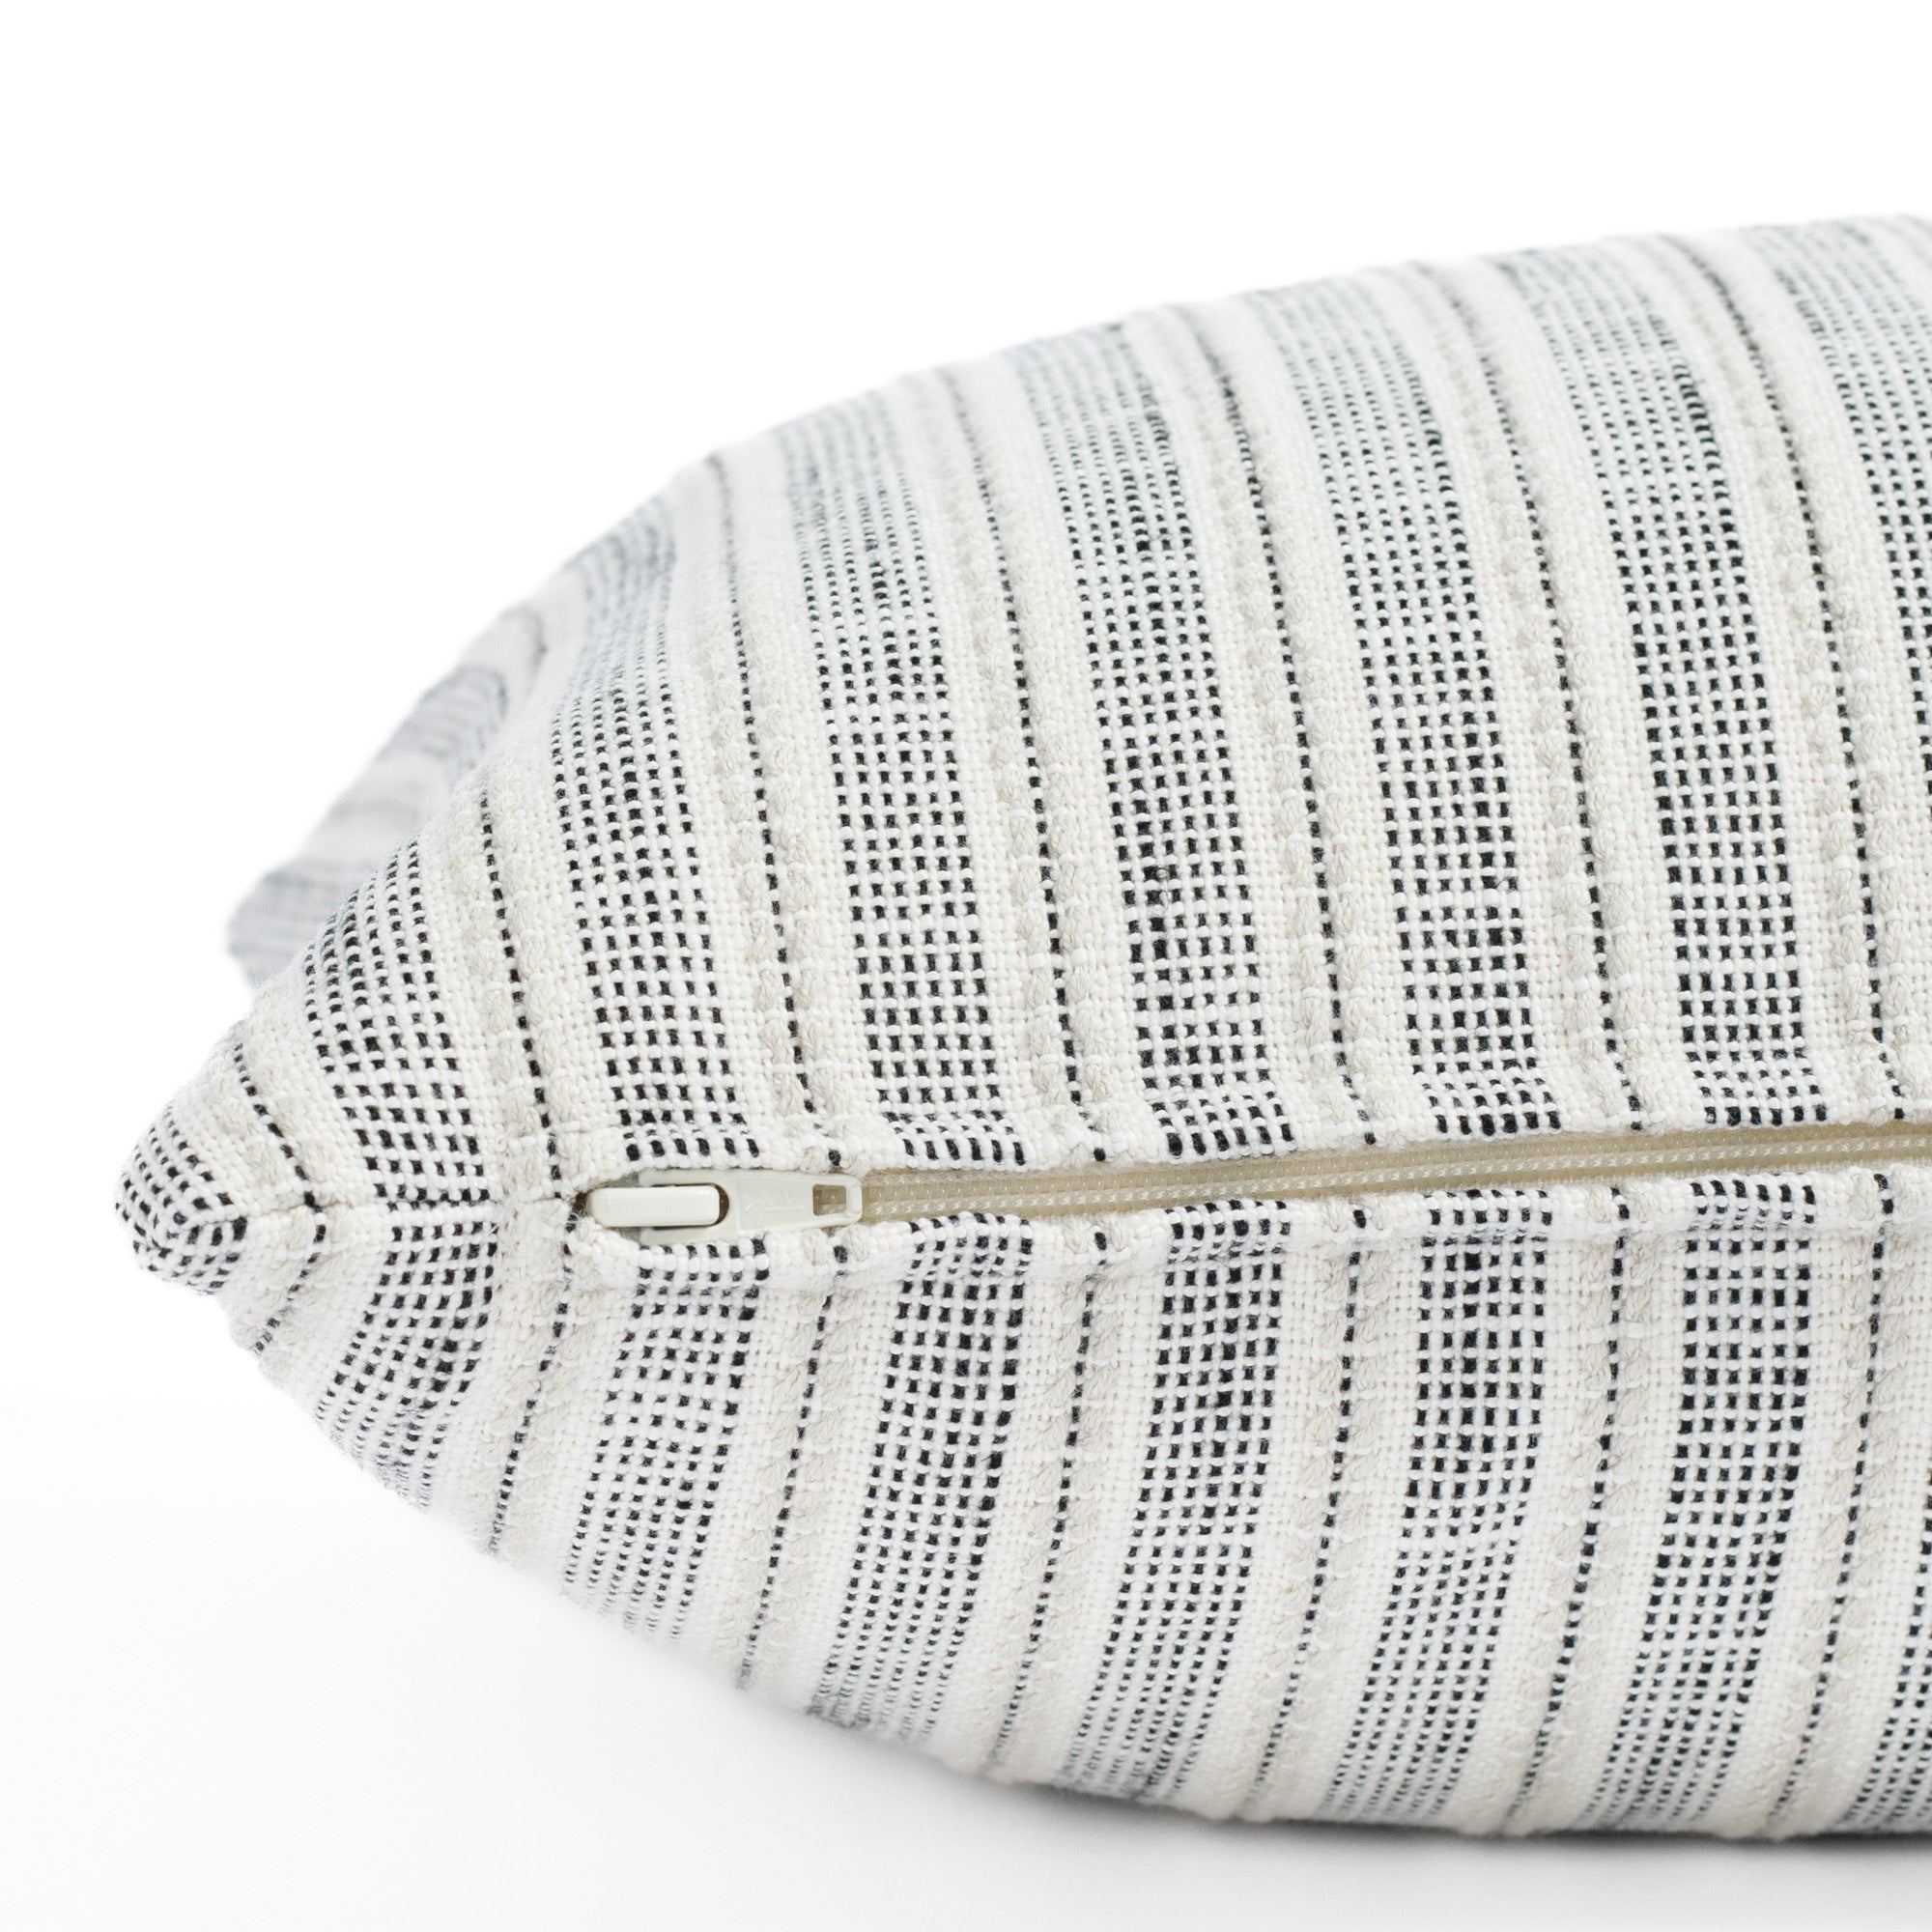 cream and black striped throw pillow : close up zipper view